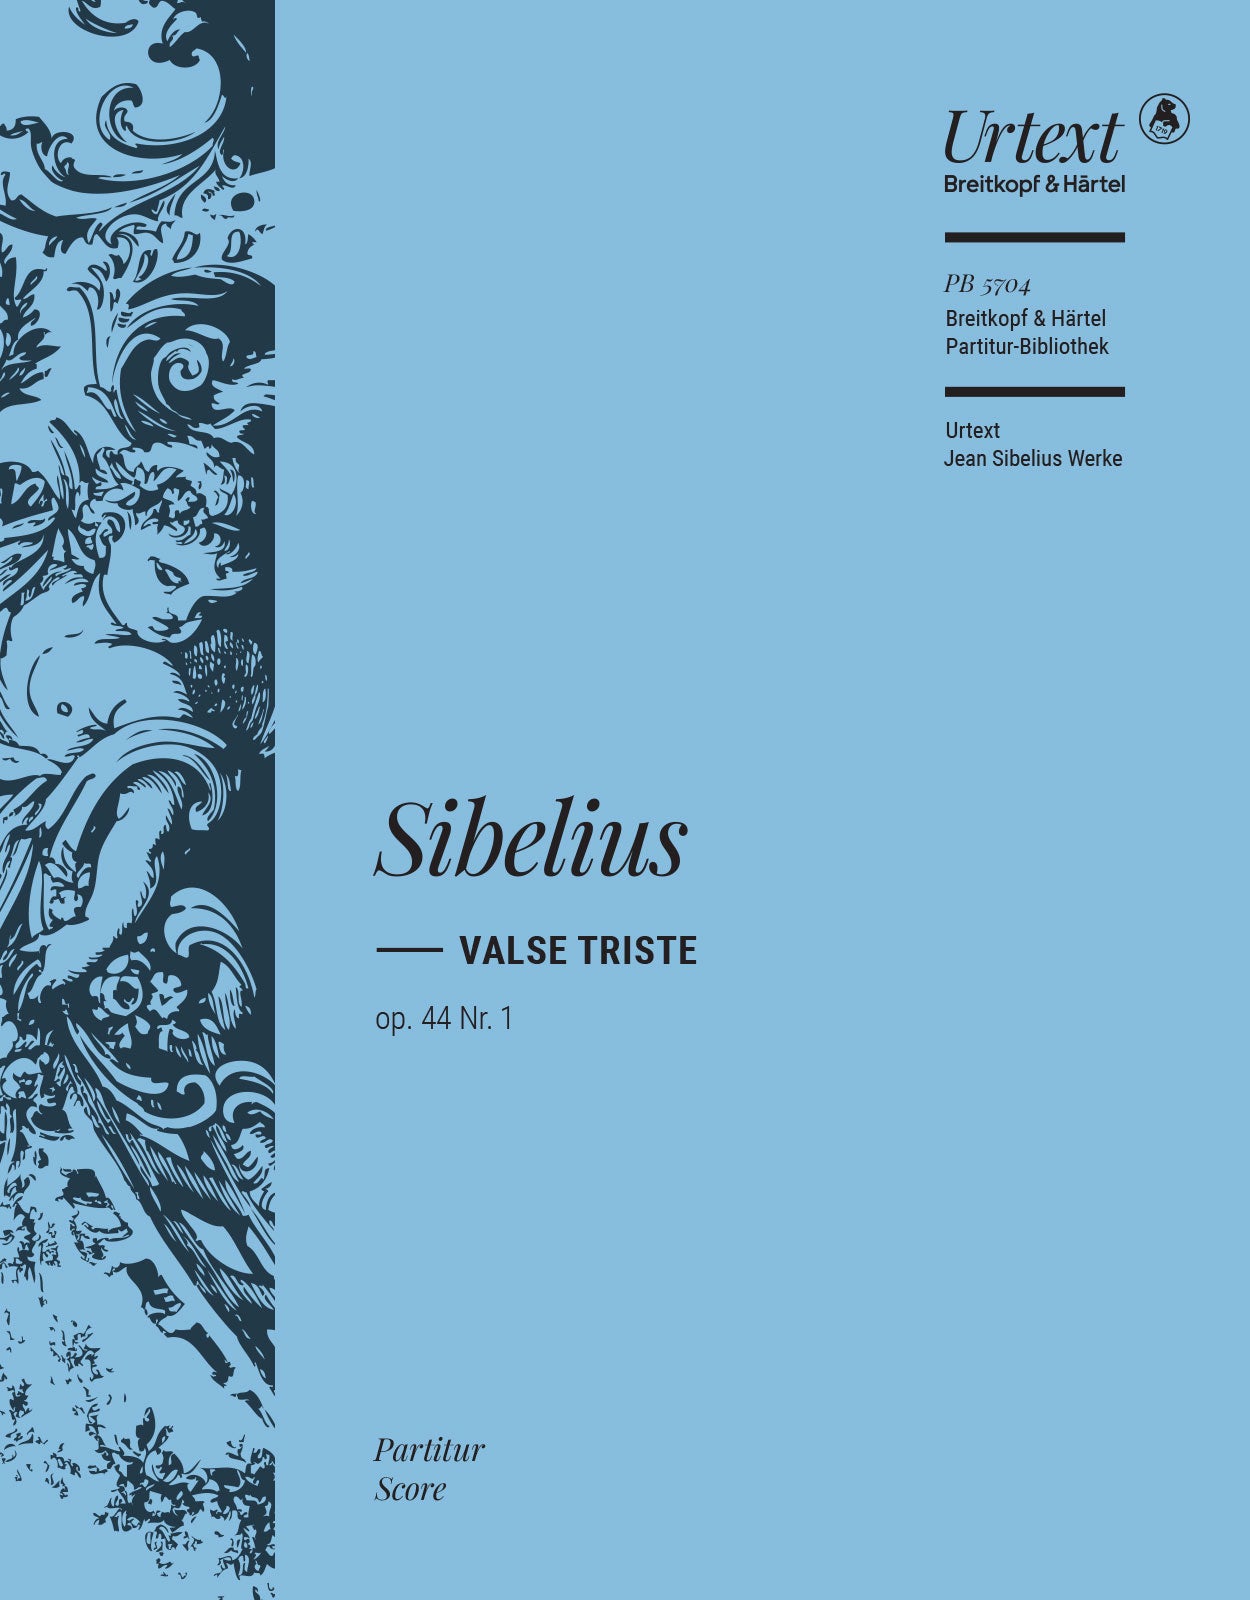 Sibelius: Valse triste, Op. 44, No. 1